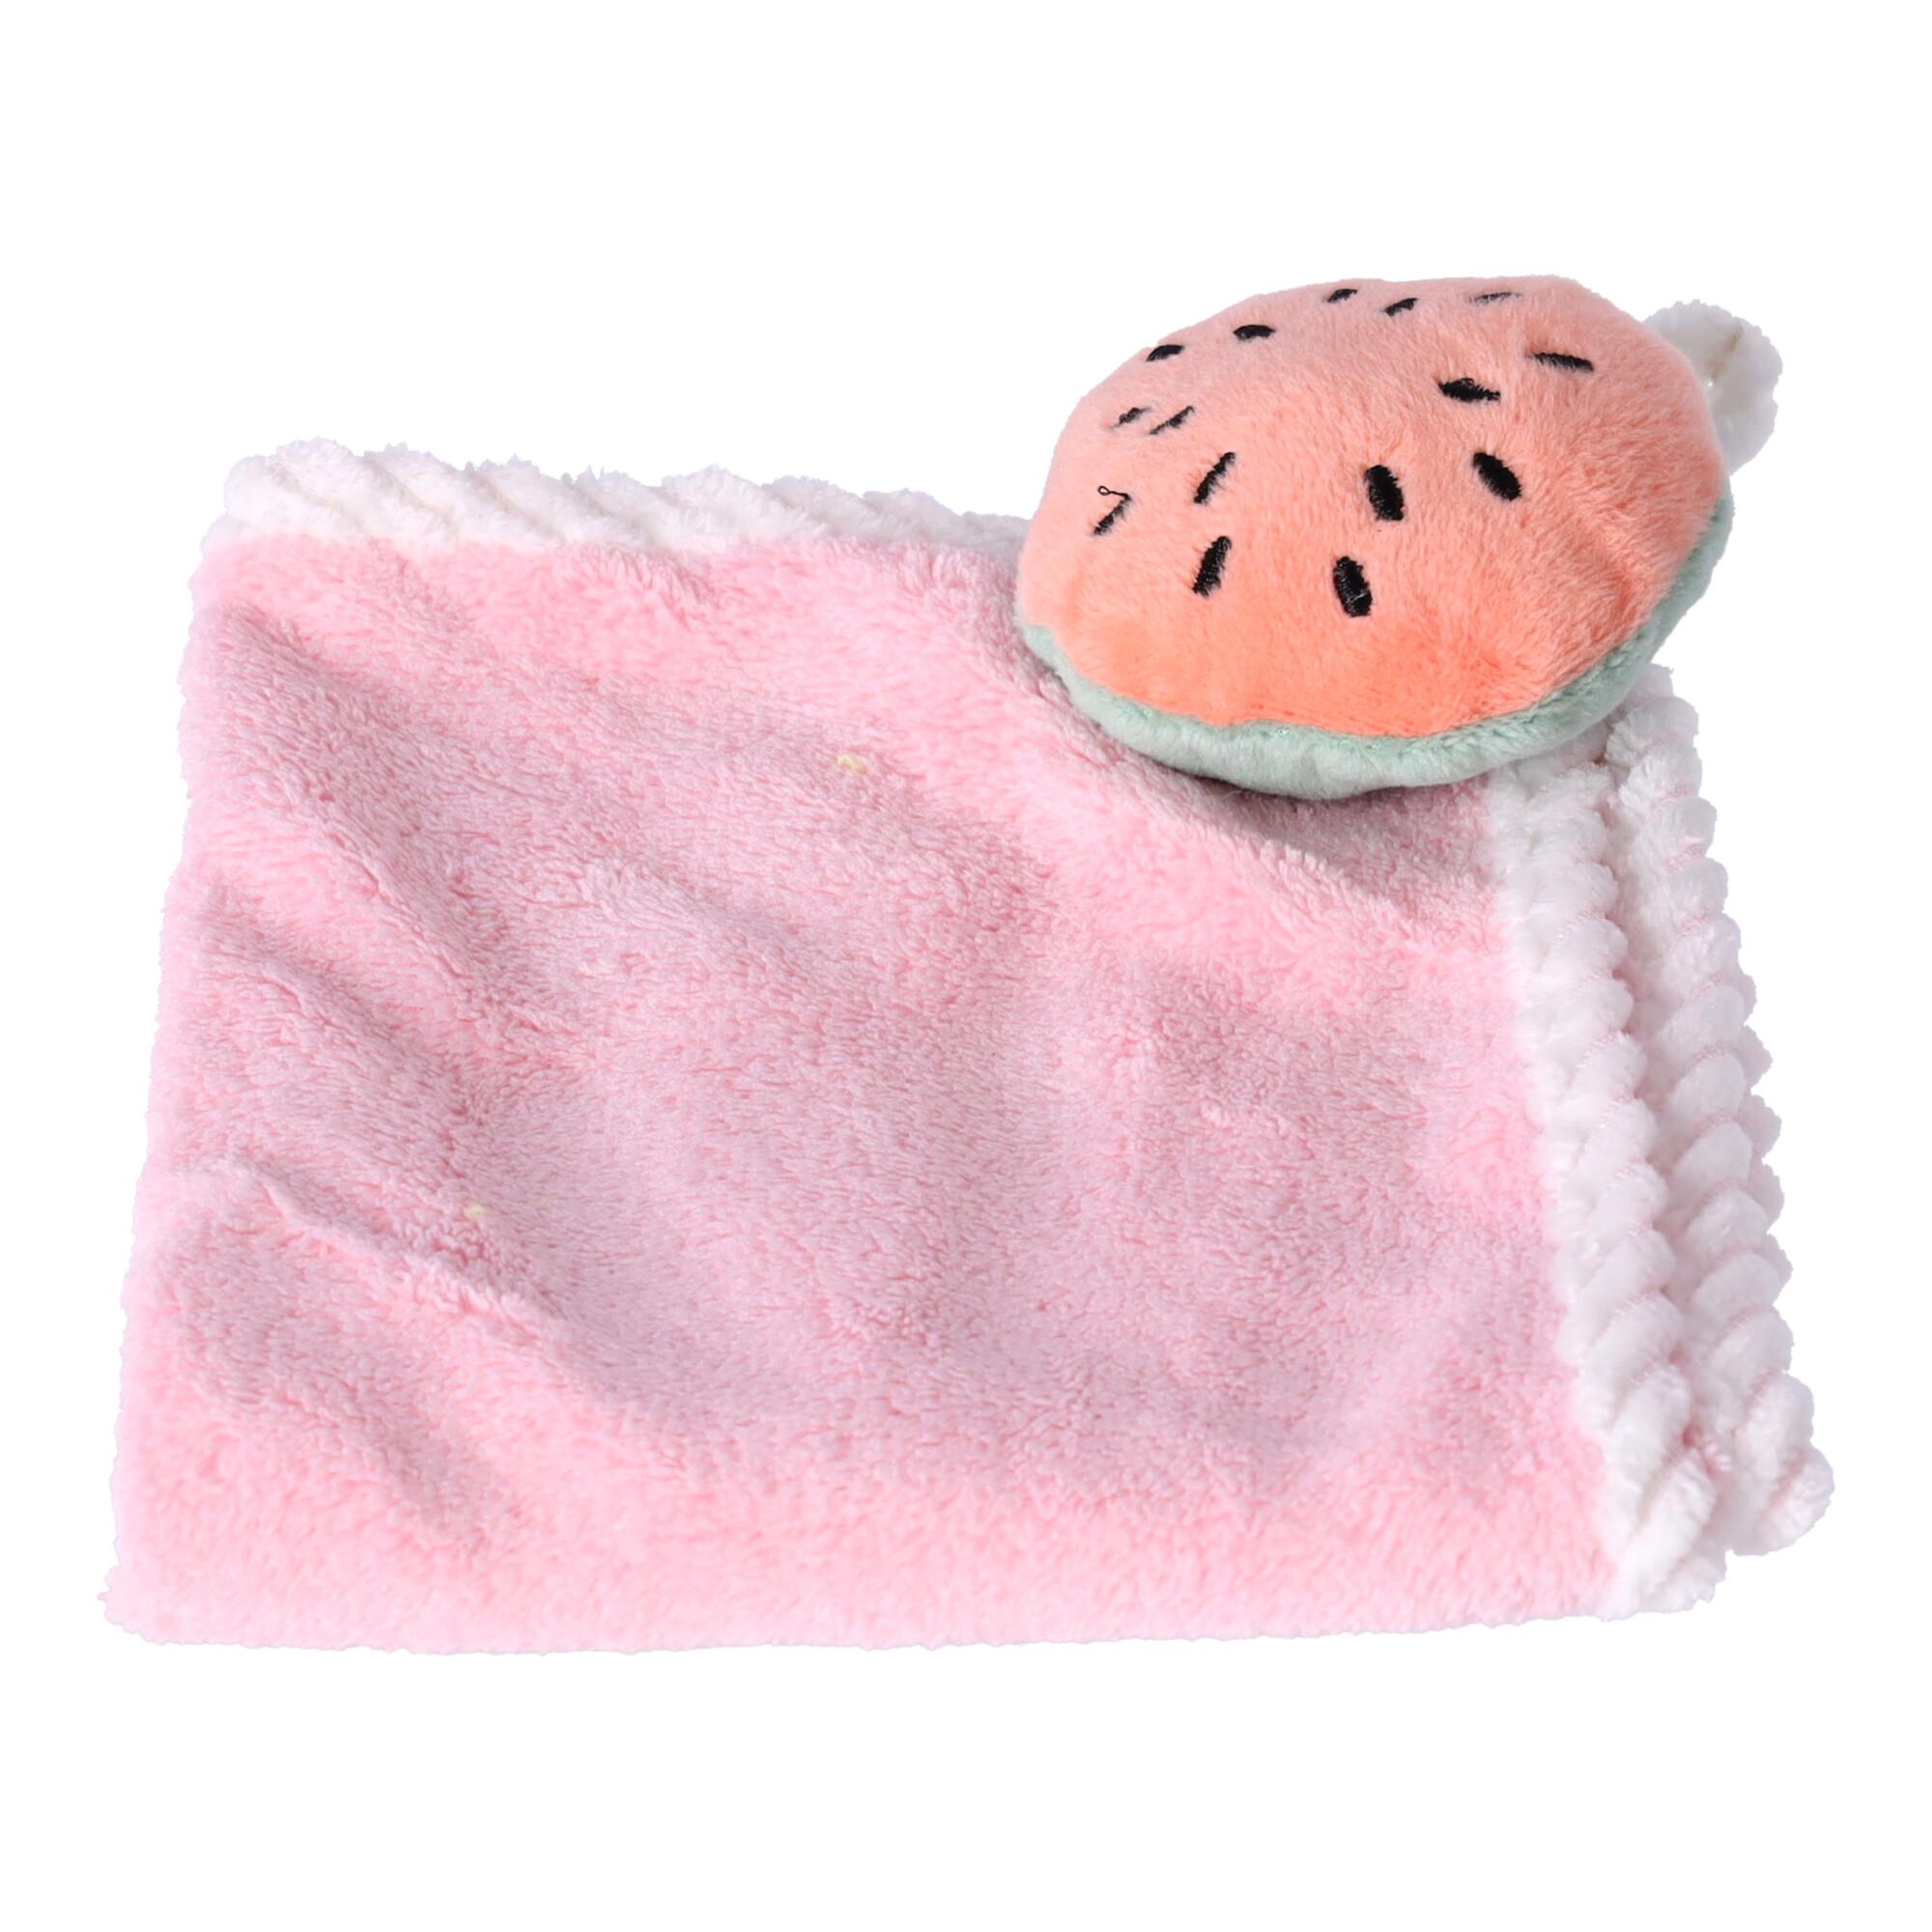 Cute kitchen towel - pink